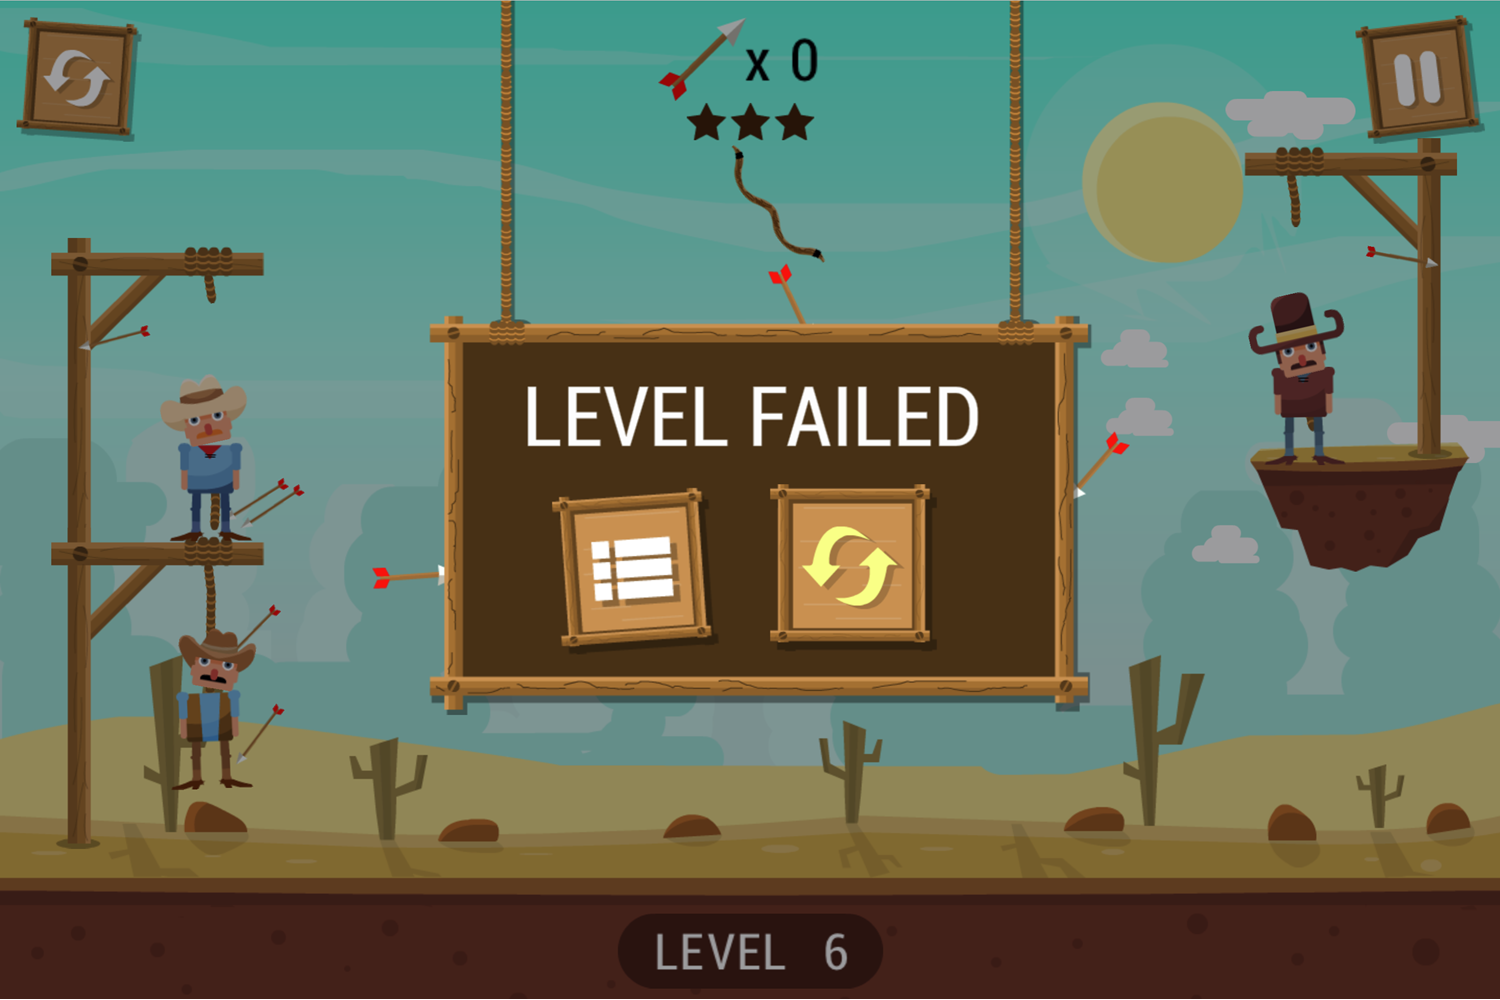 Save the Cowboy Game Level Failed Screen Screenshot.